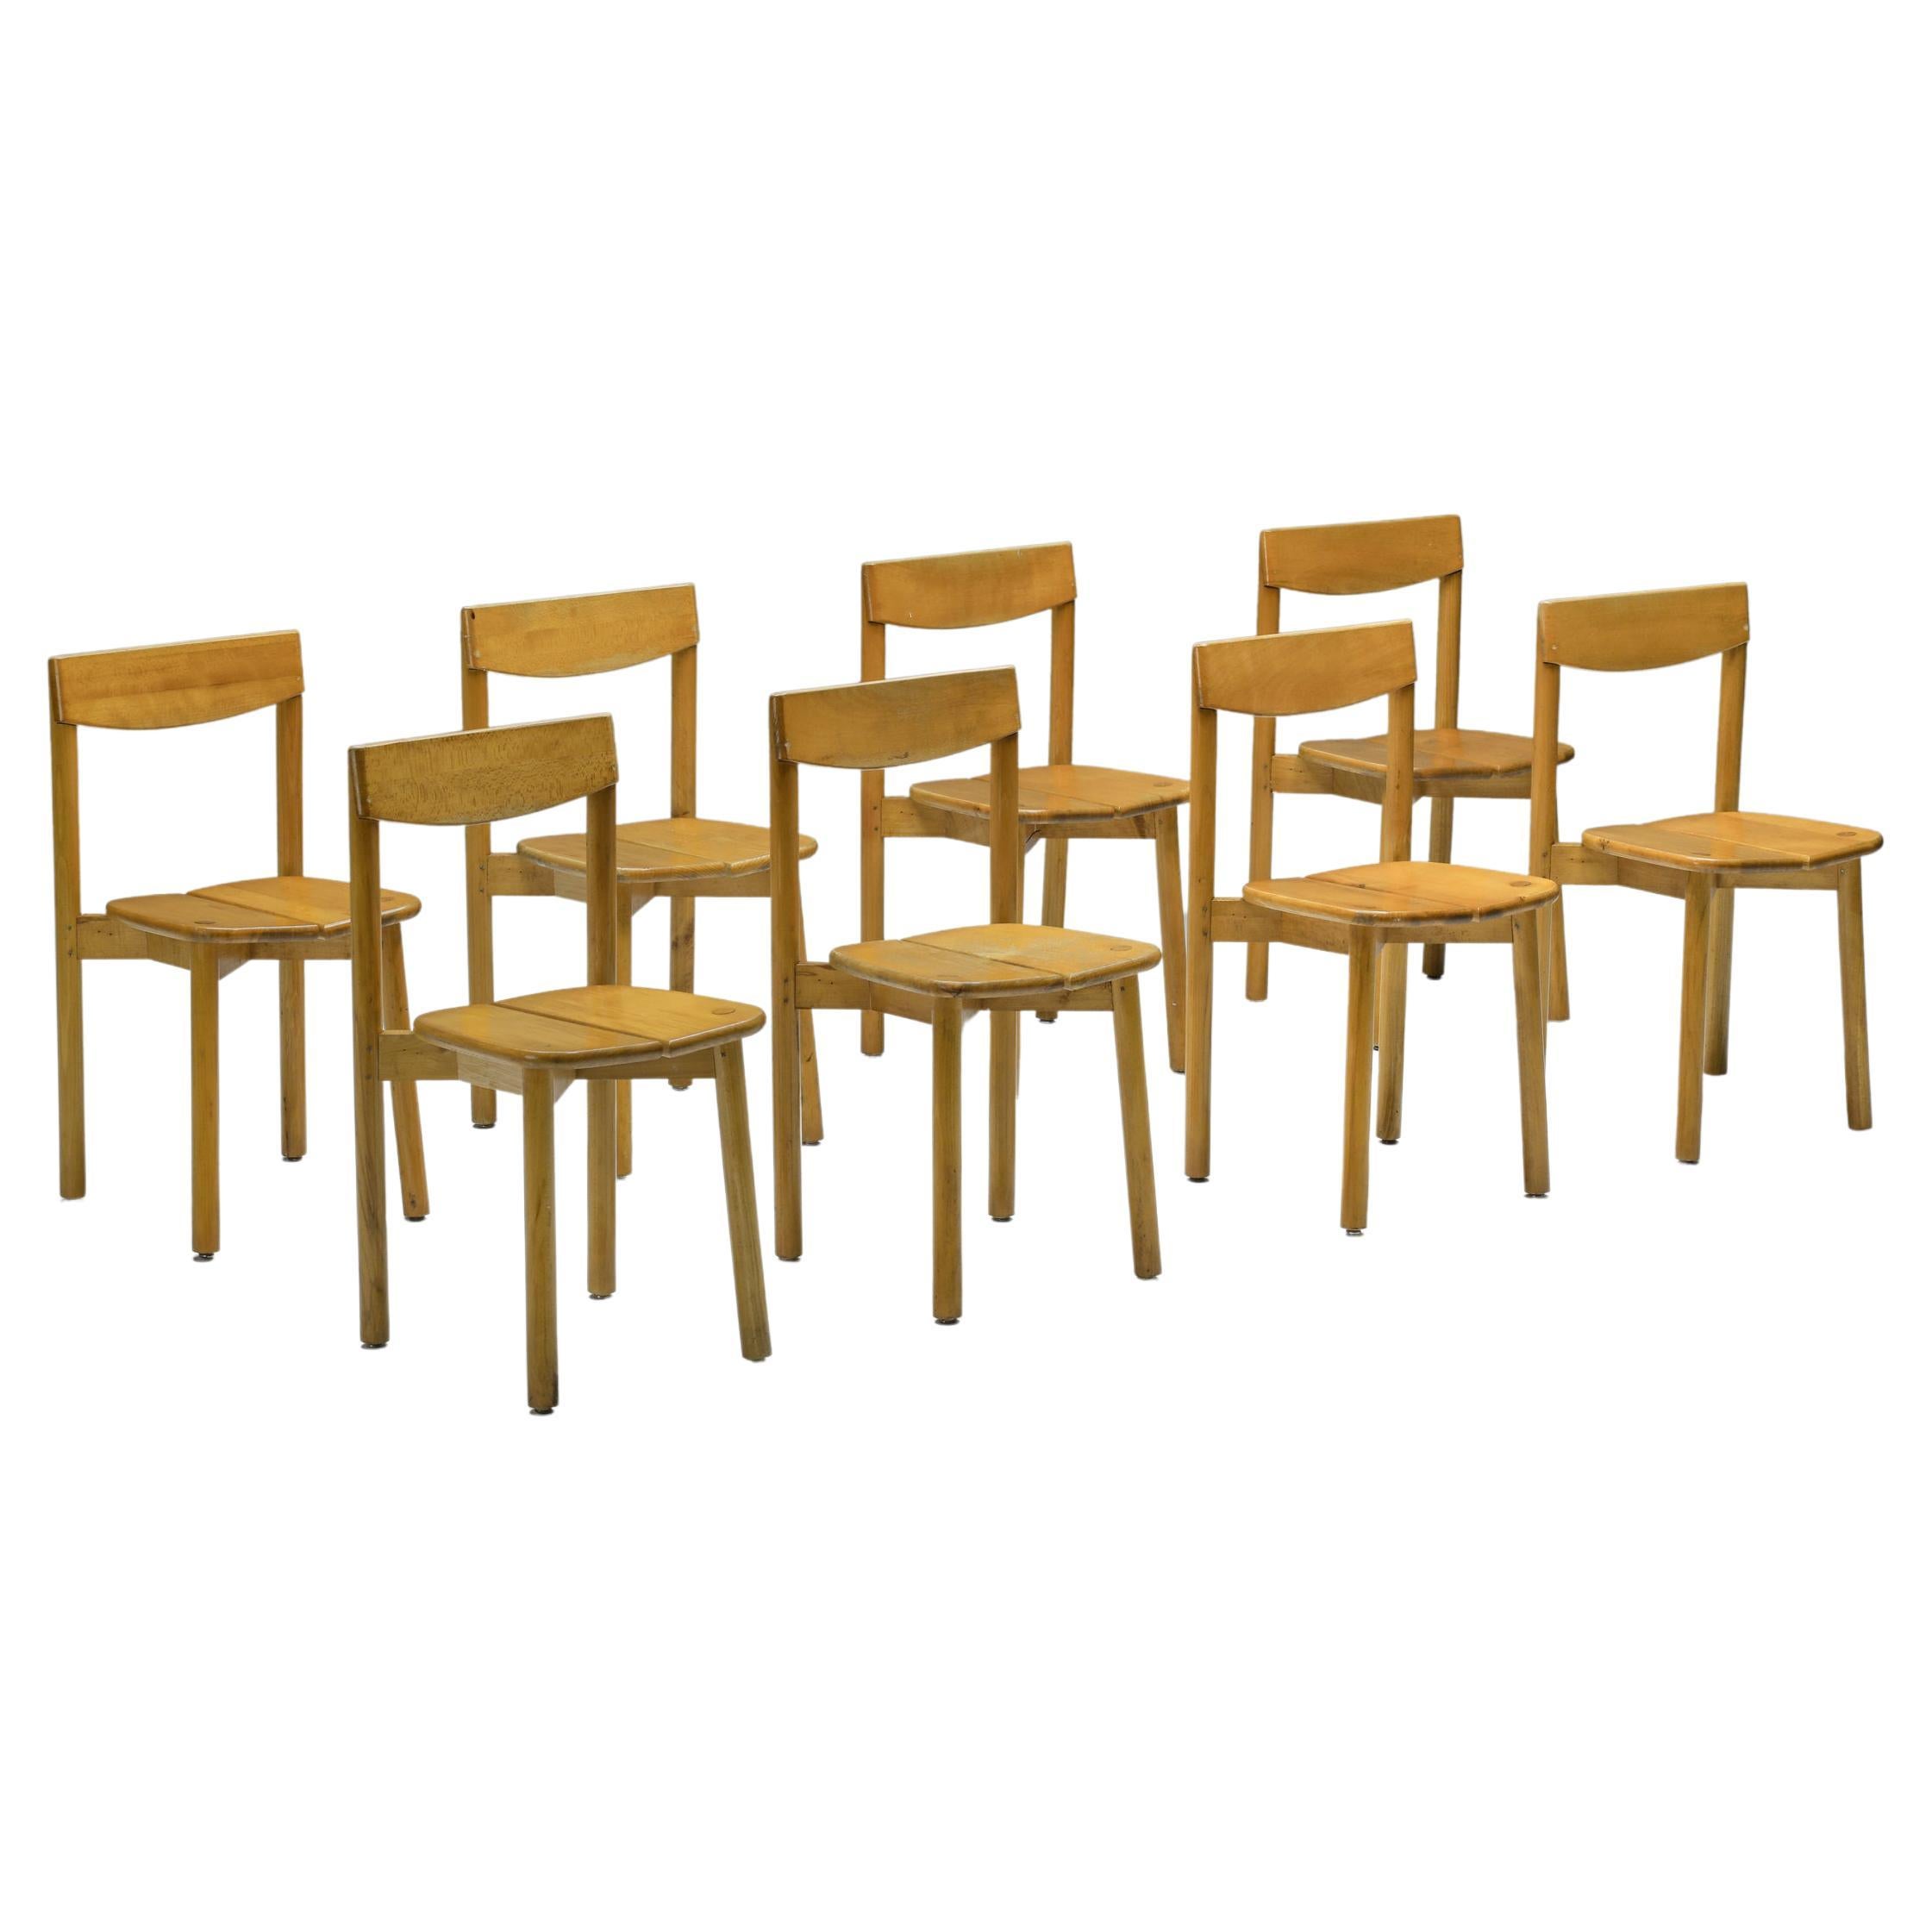 Pierre Gautier-Delaye Dining Chairs, Mid-Century Modern, Beech, French Organic